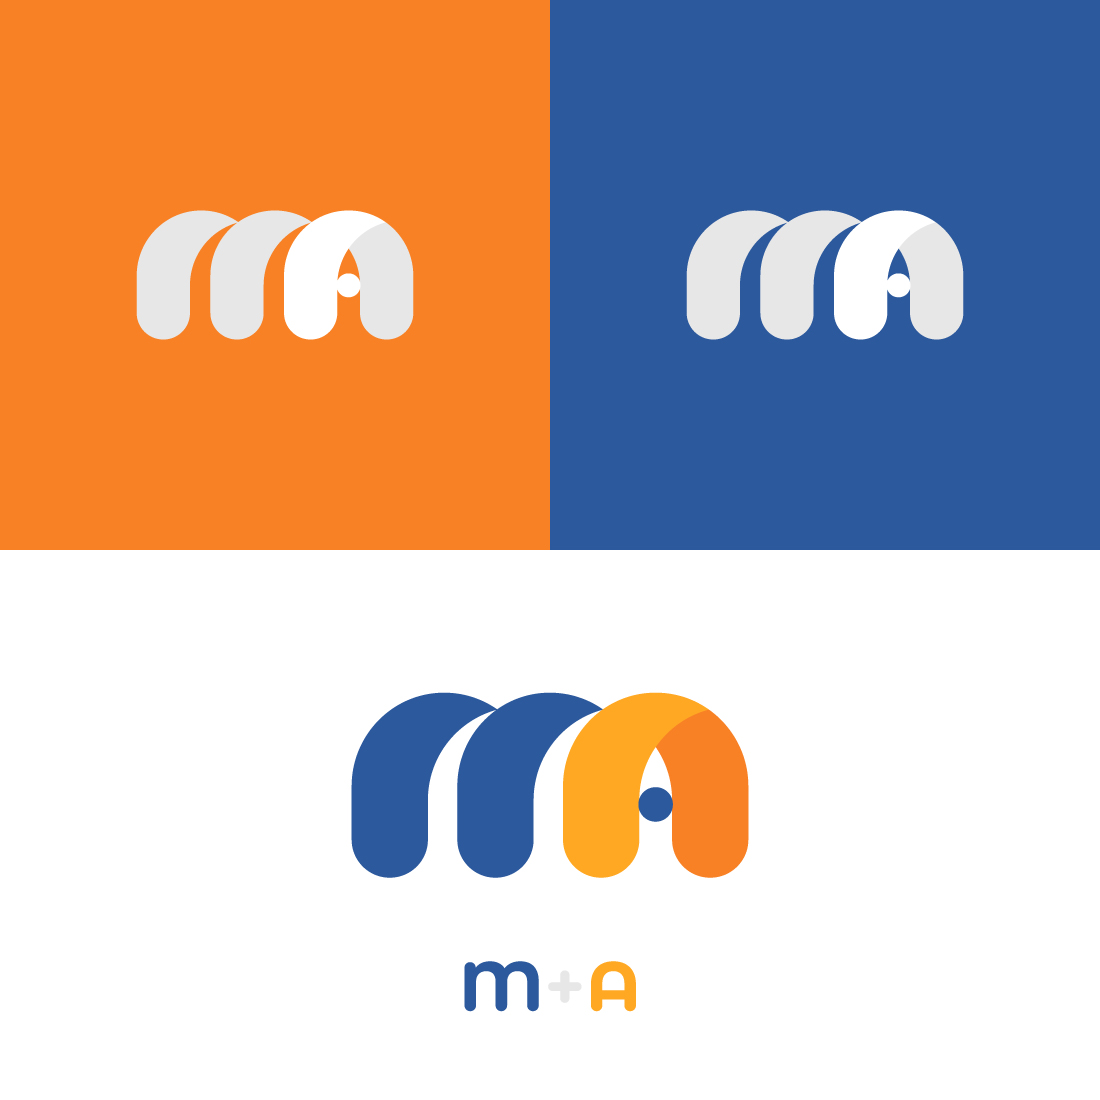 MA Letter logo cover image.